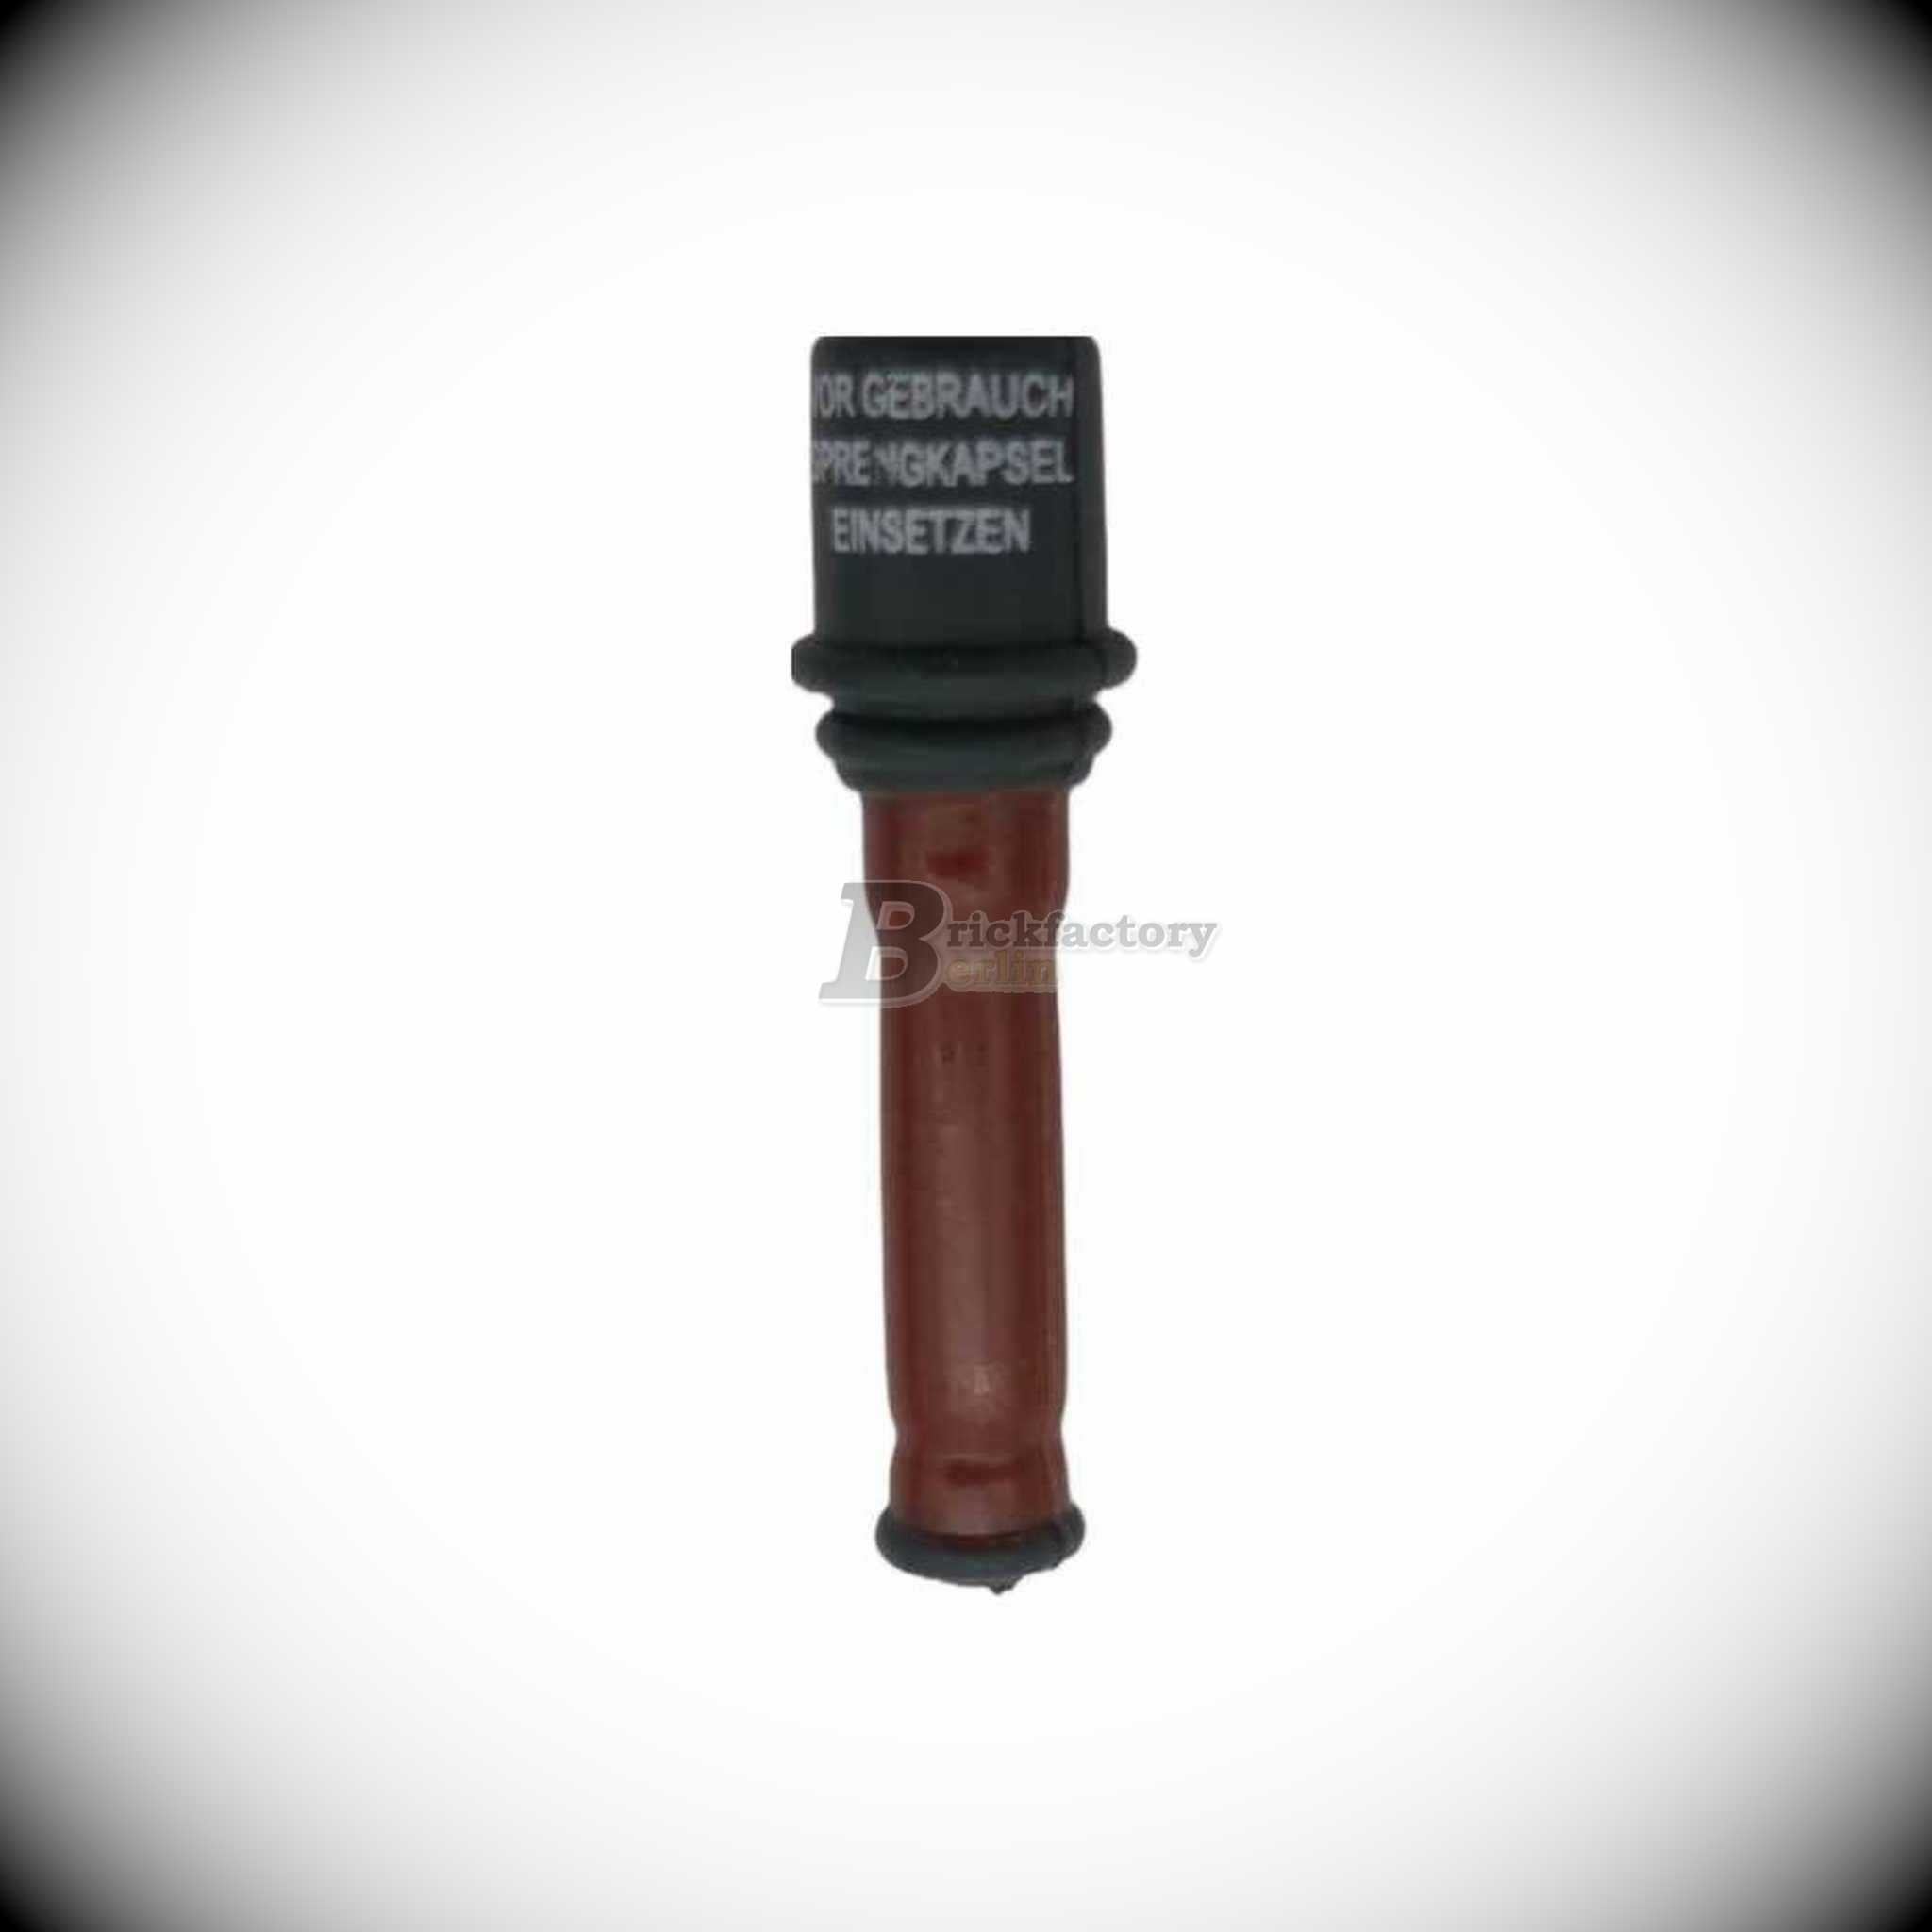 BF-0500 - WWII stick grenade printed (Brickfactory)